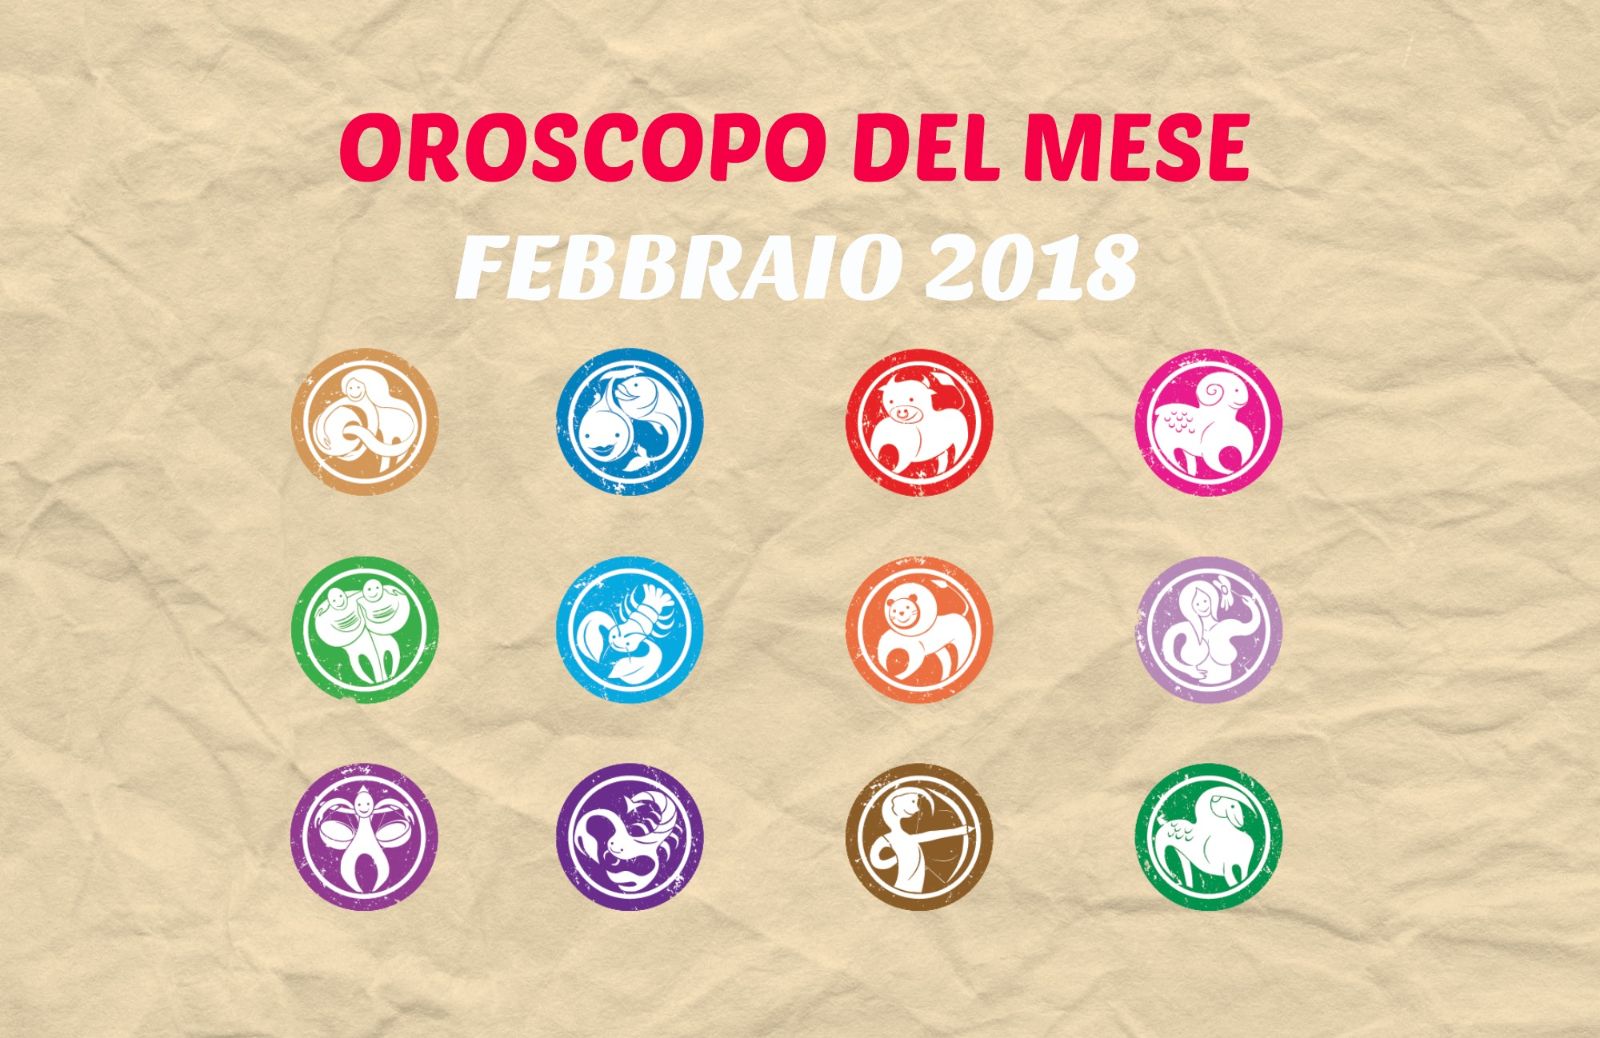 Oroscopo del mese: febbraio 2018